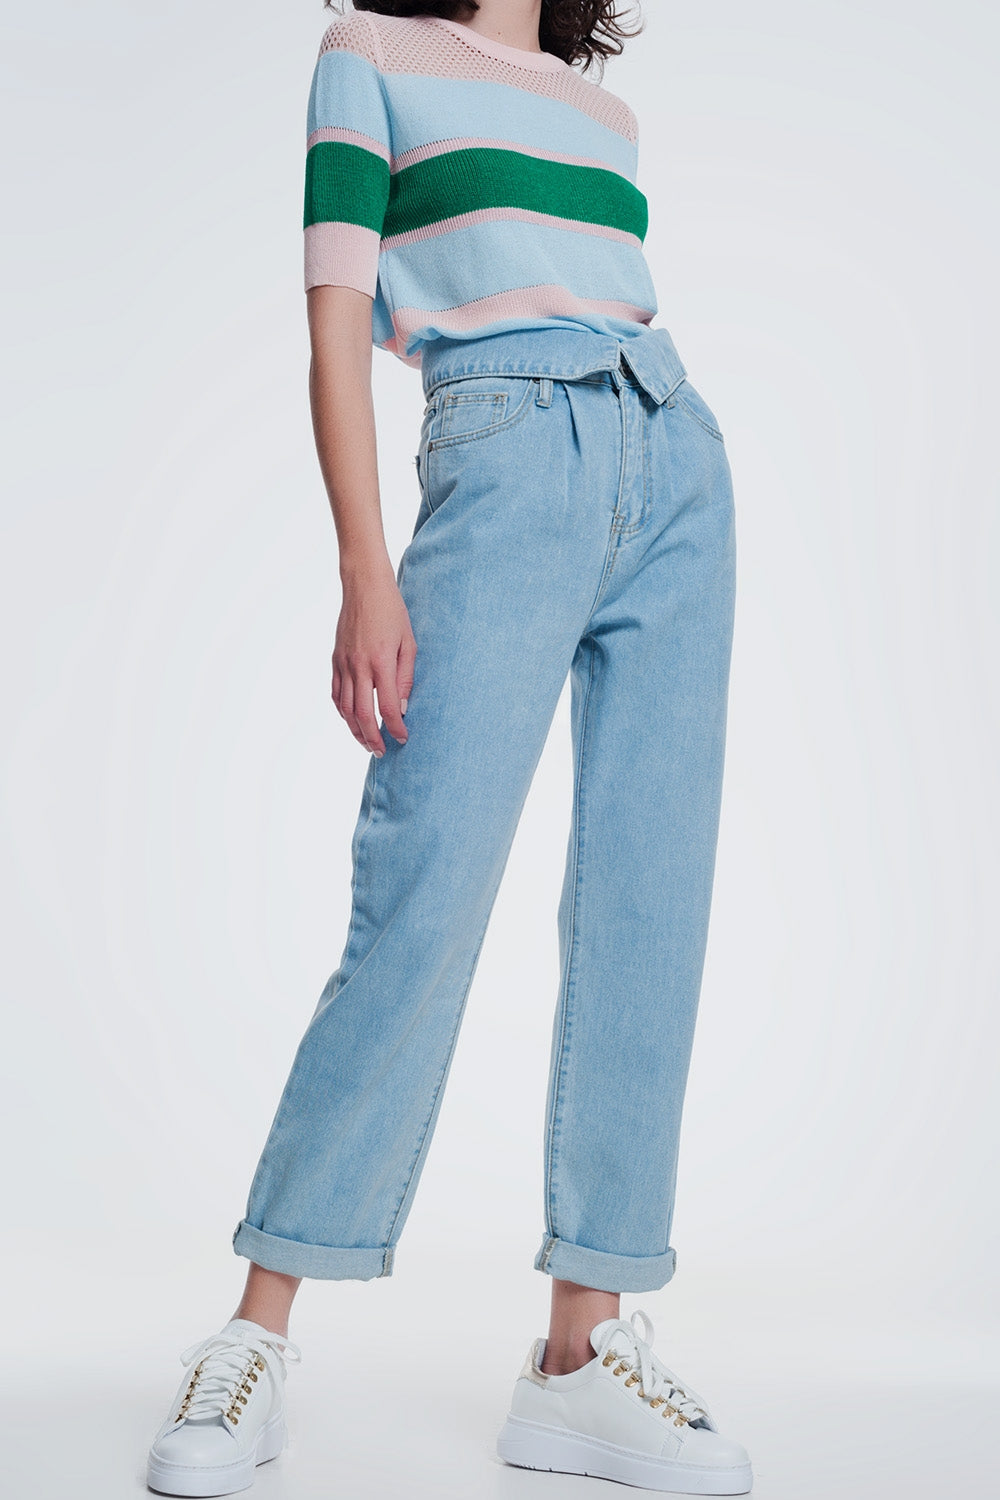 Q2 Light denim straight jeans with folded waist